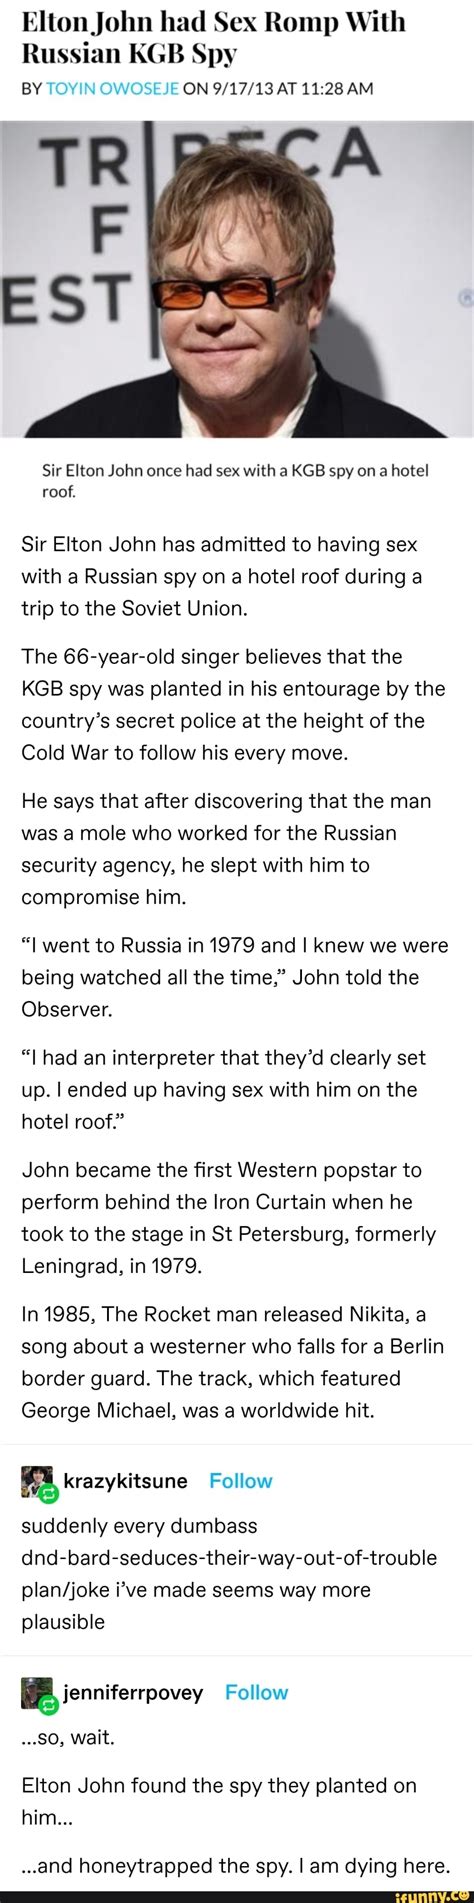 Elton John Had Sex Romp With Russian Kgb Spy By Toyin